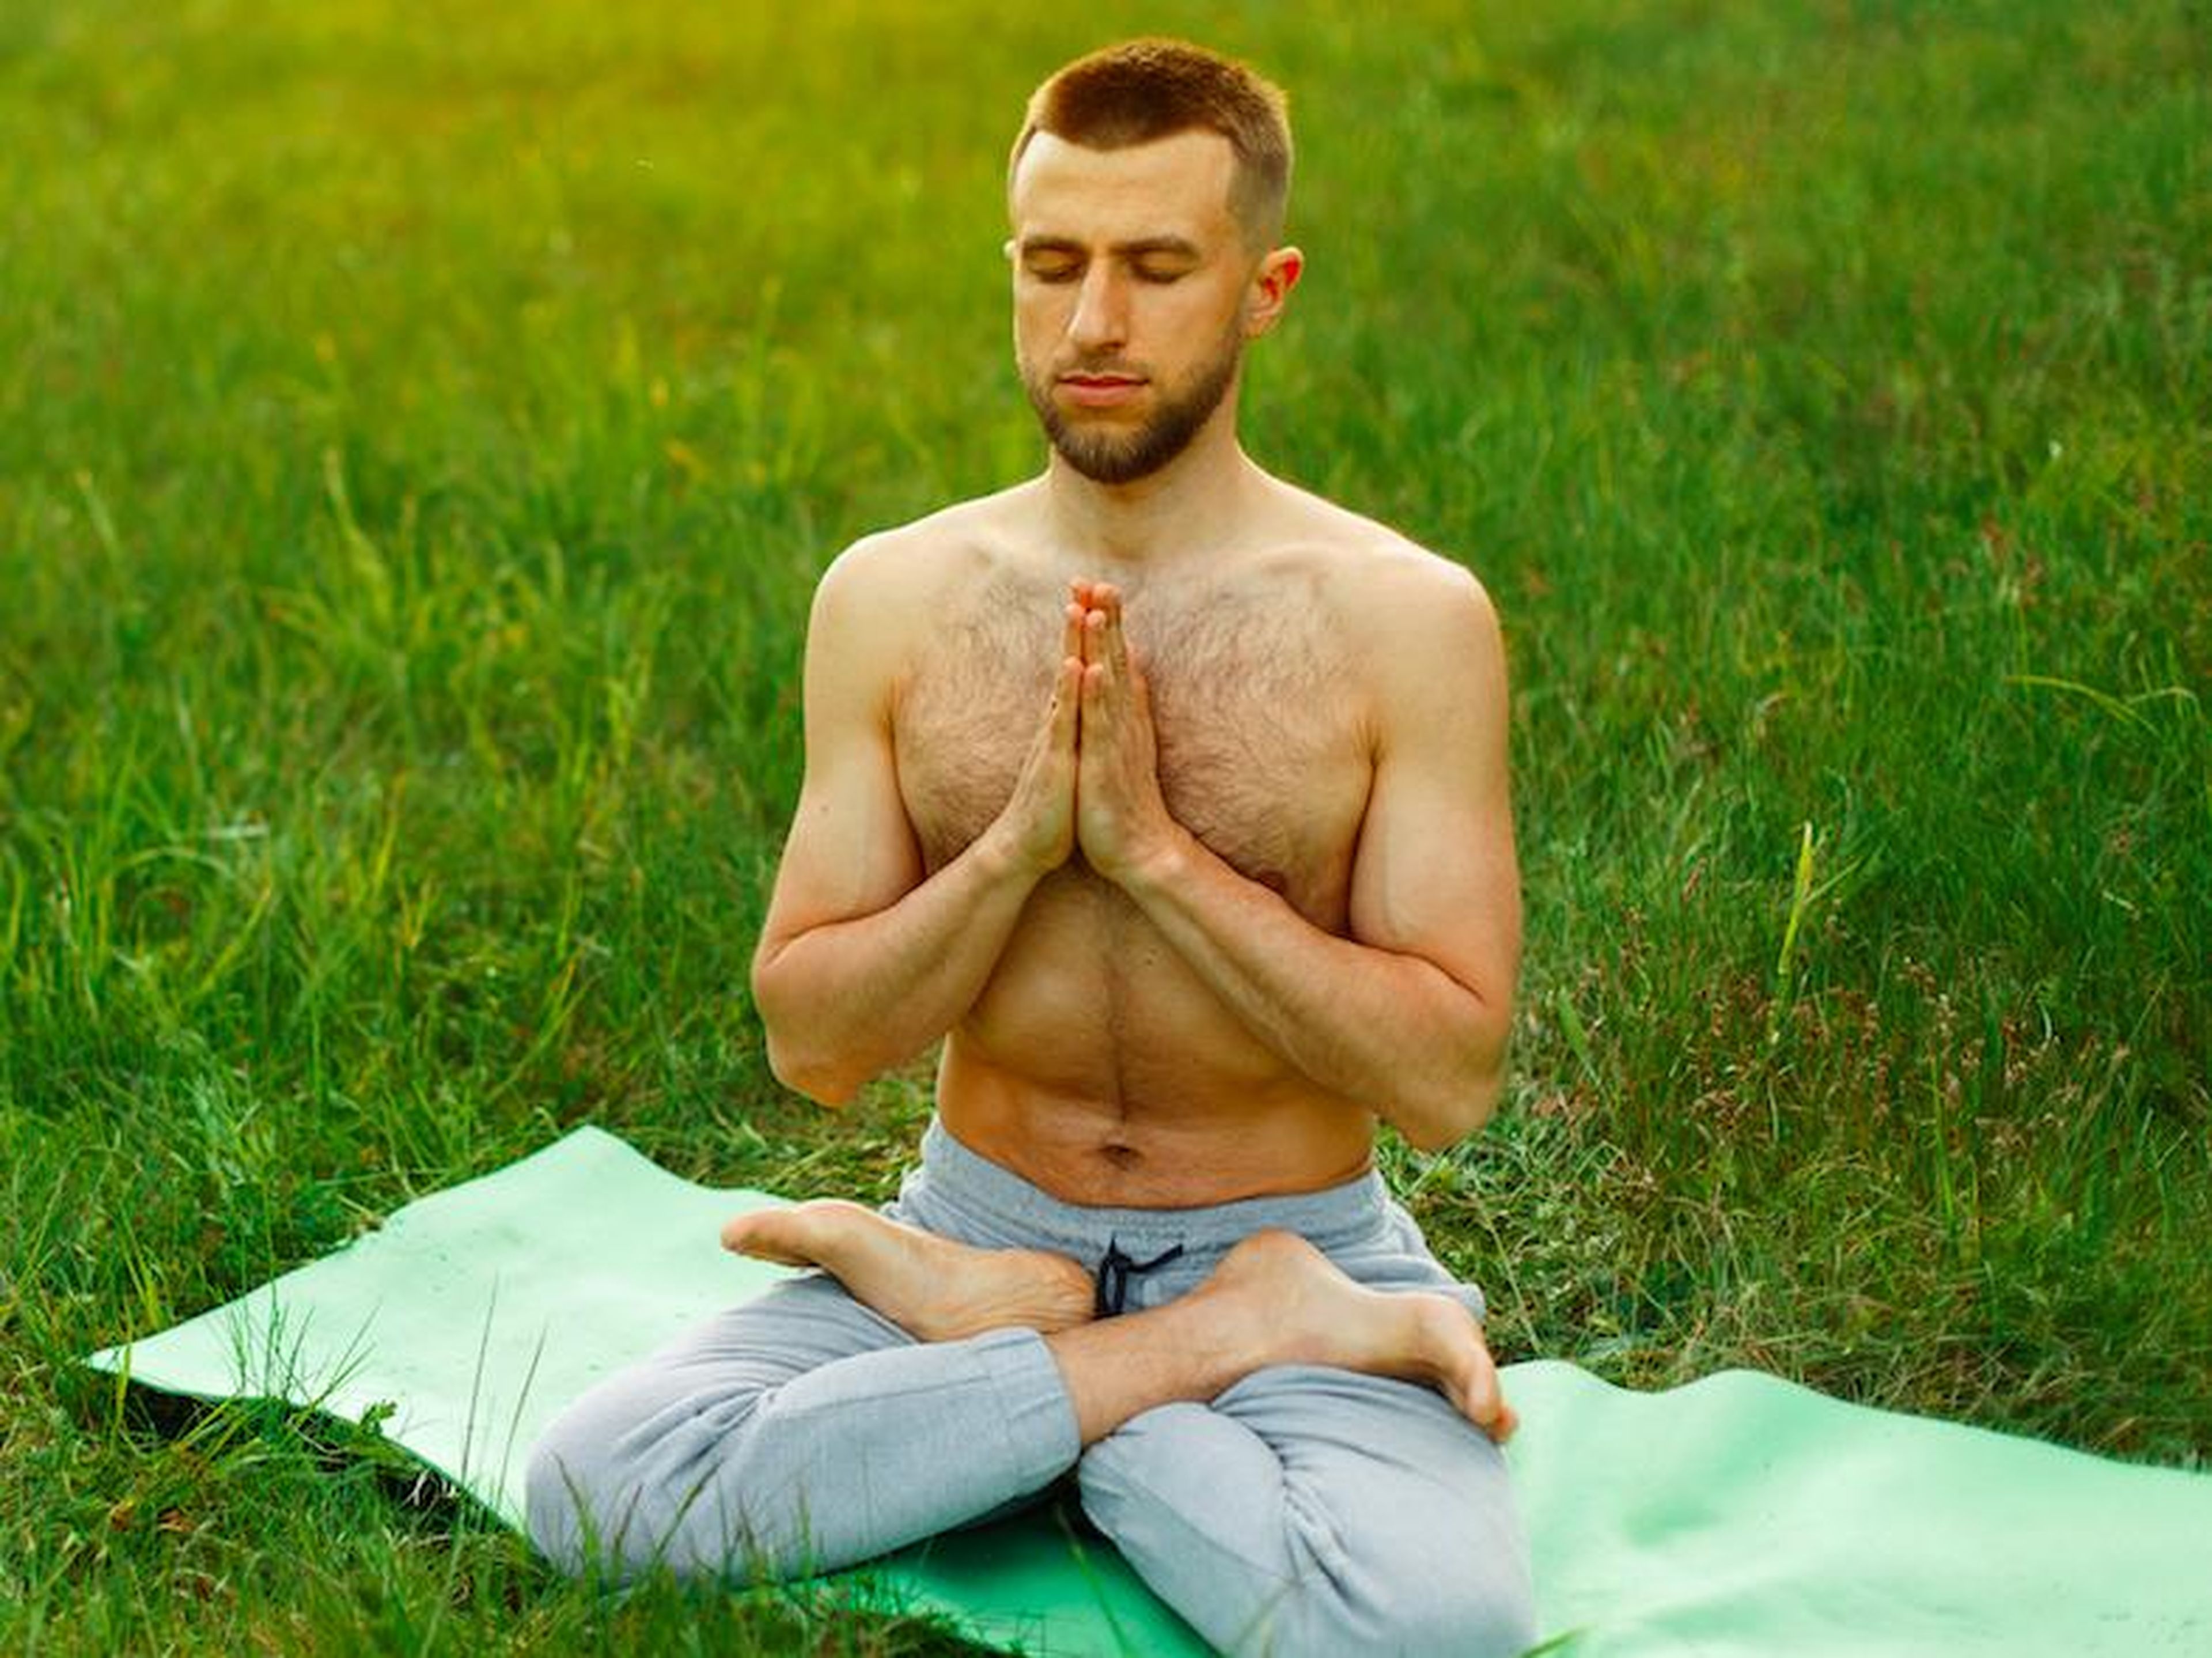 Do a 'mini-meditation'